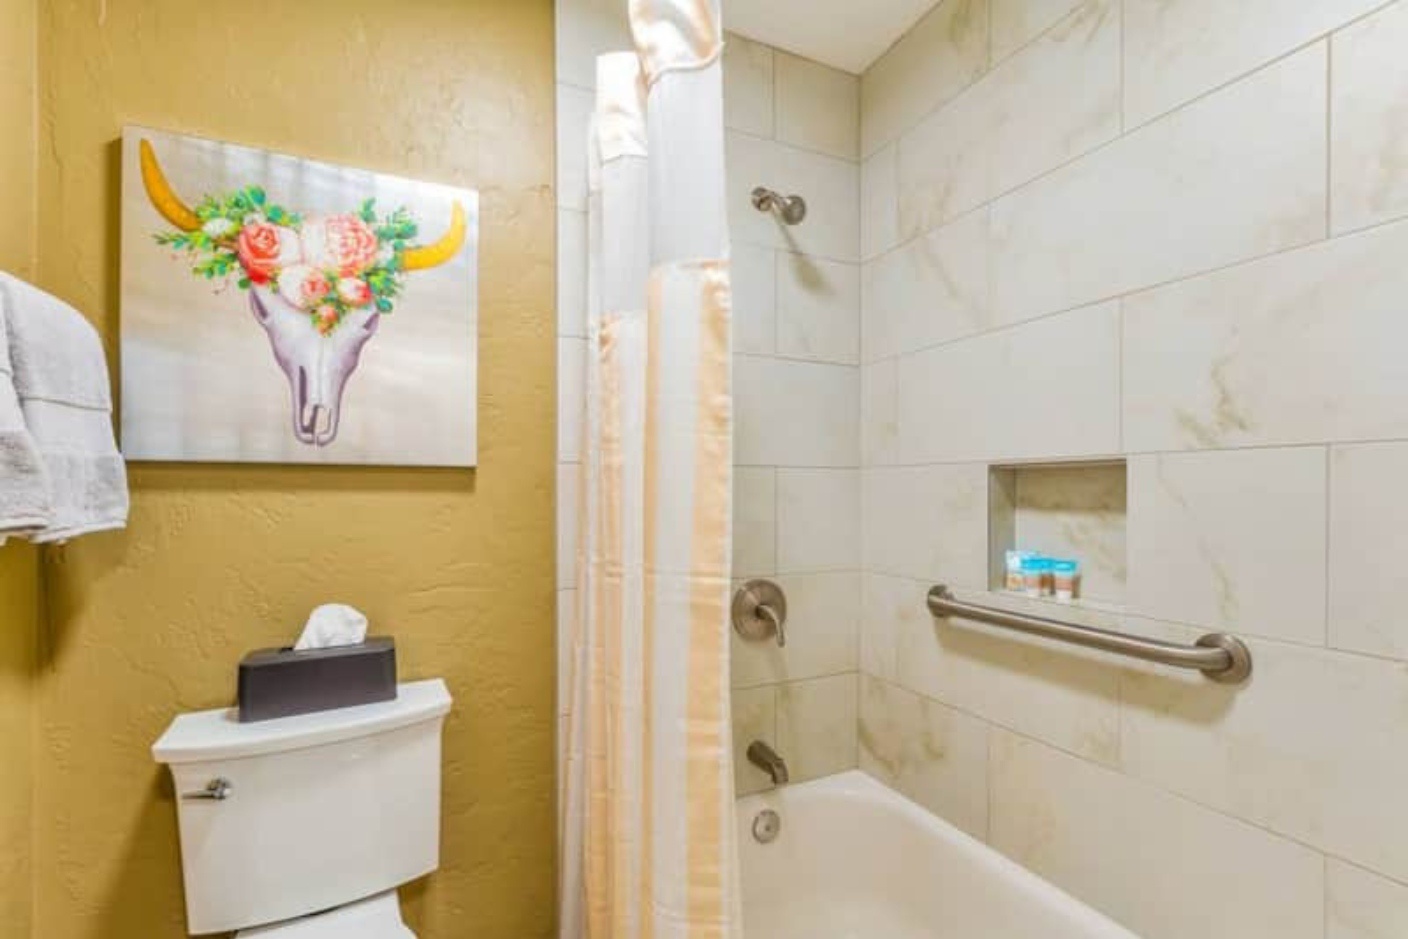 Kapaa Vacation Rentals, Kahaki Hale - The bathroom features a shower/tub combo